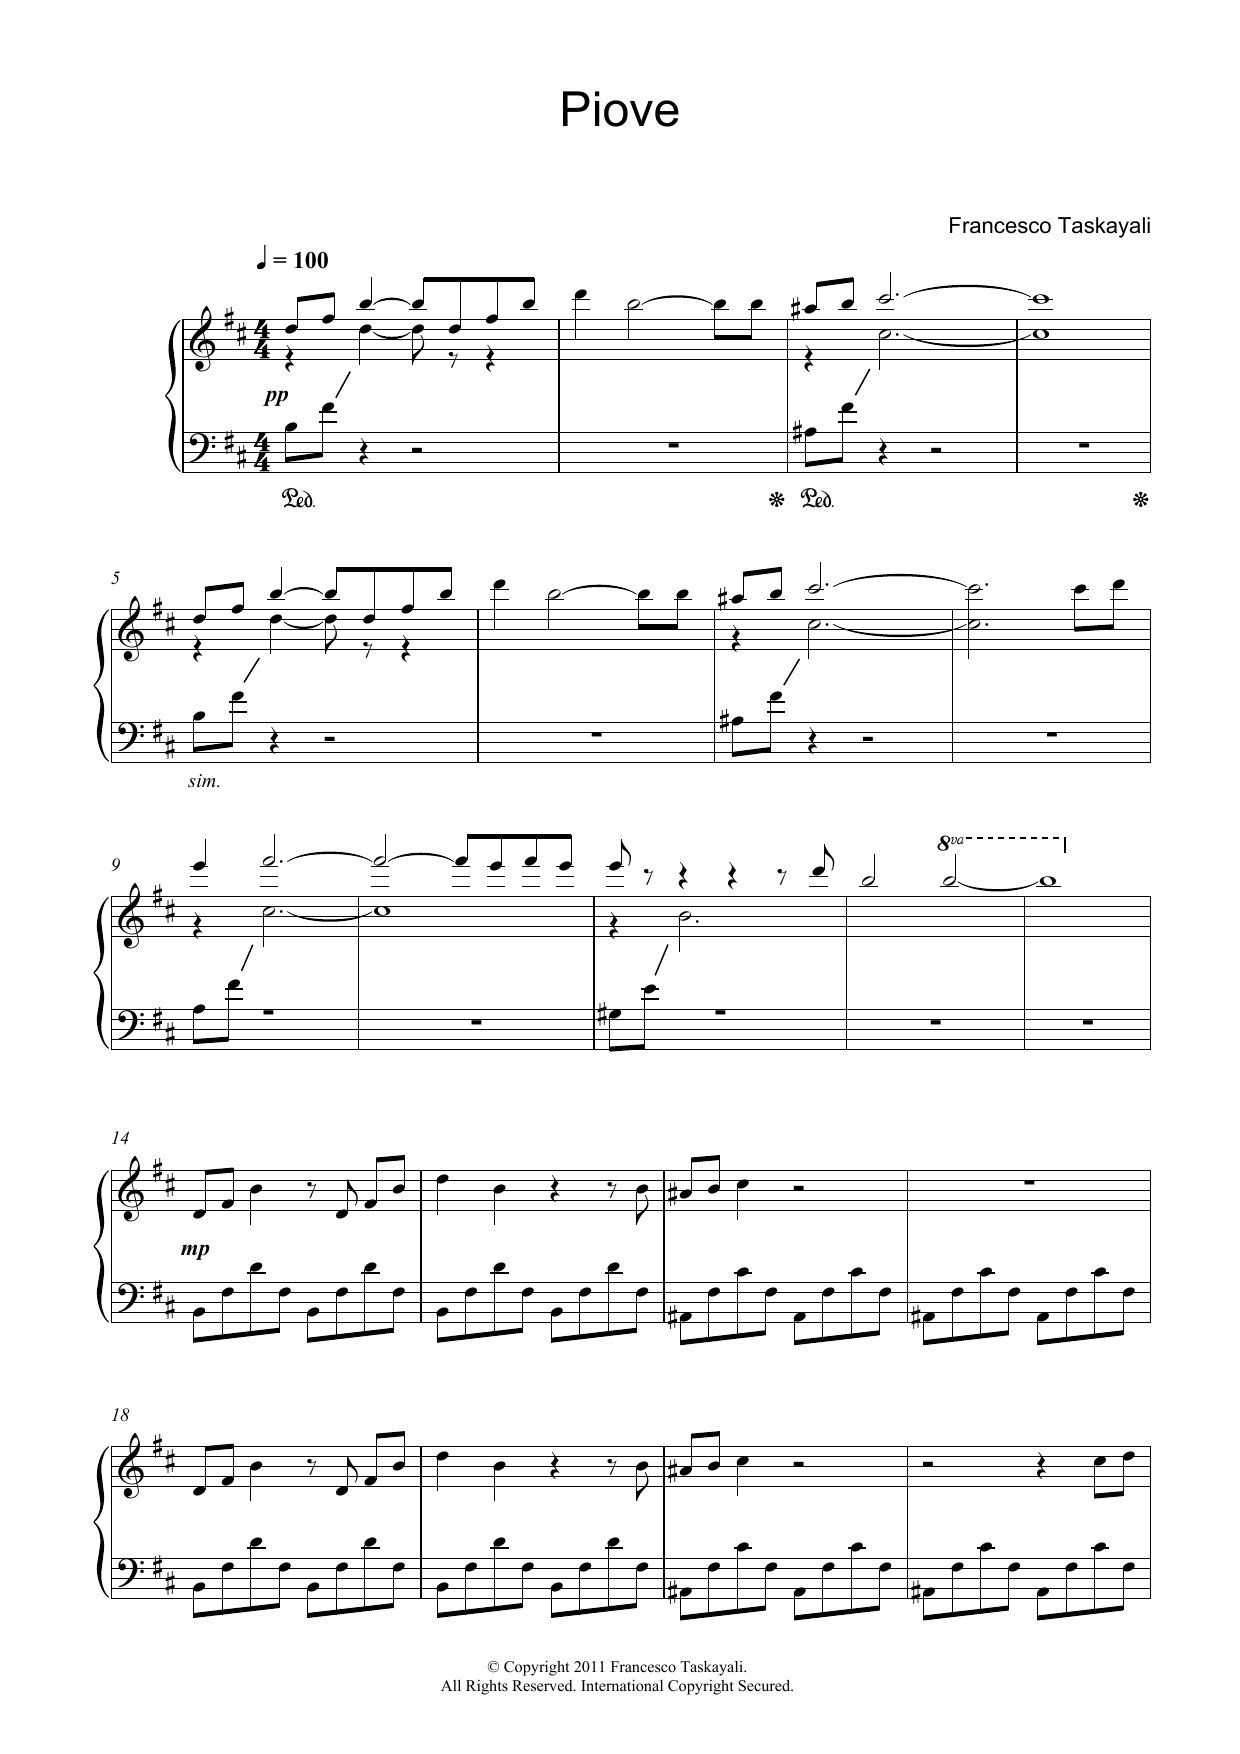 Francesco Taskayali Piove Sheet Music Notes & Chords for Piano - Download or Print PDF